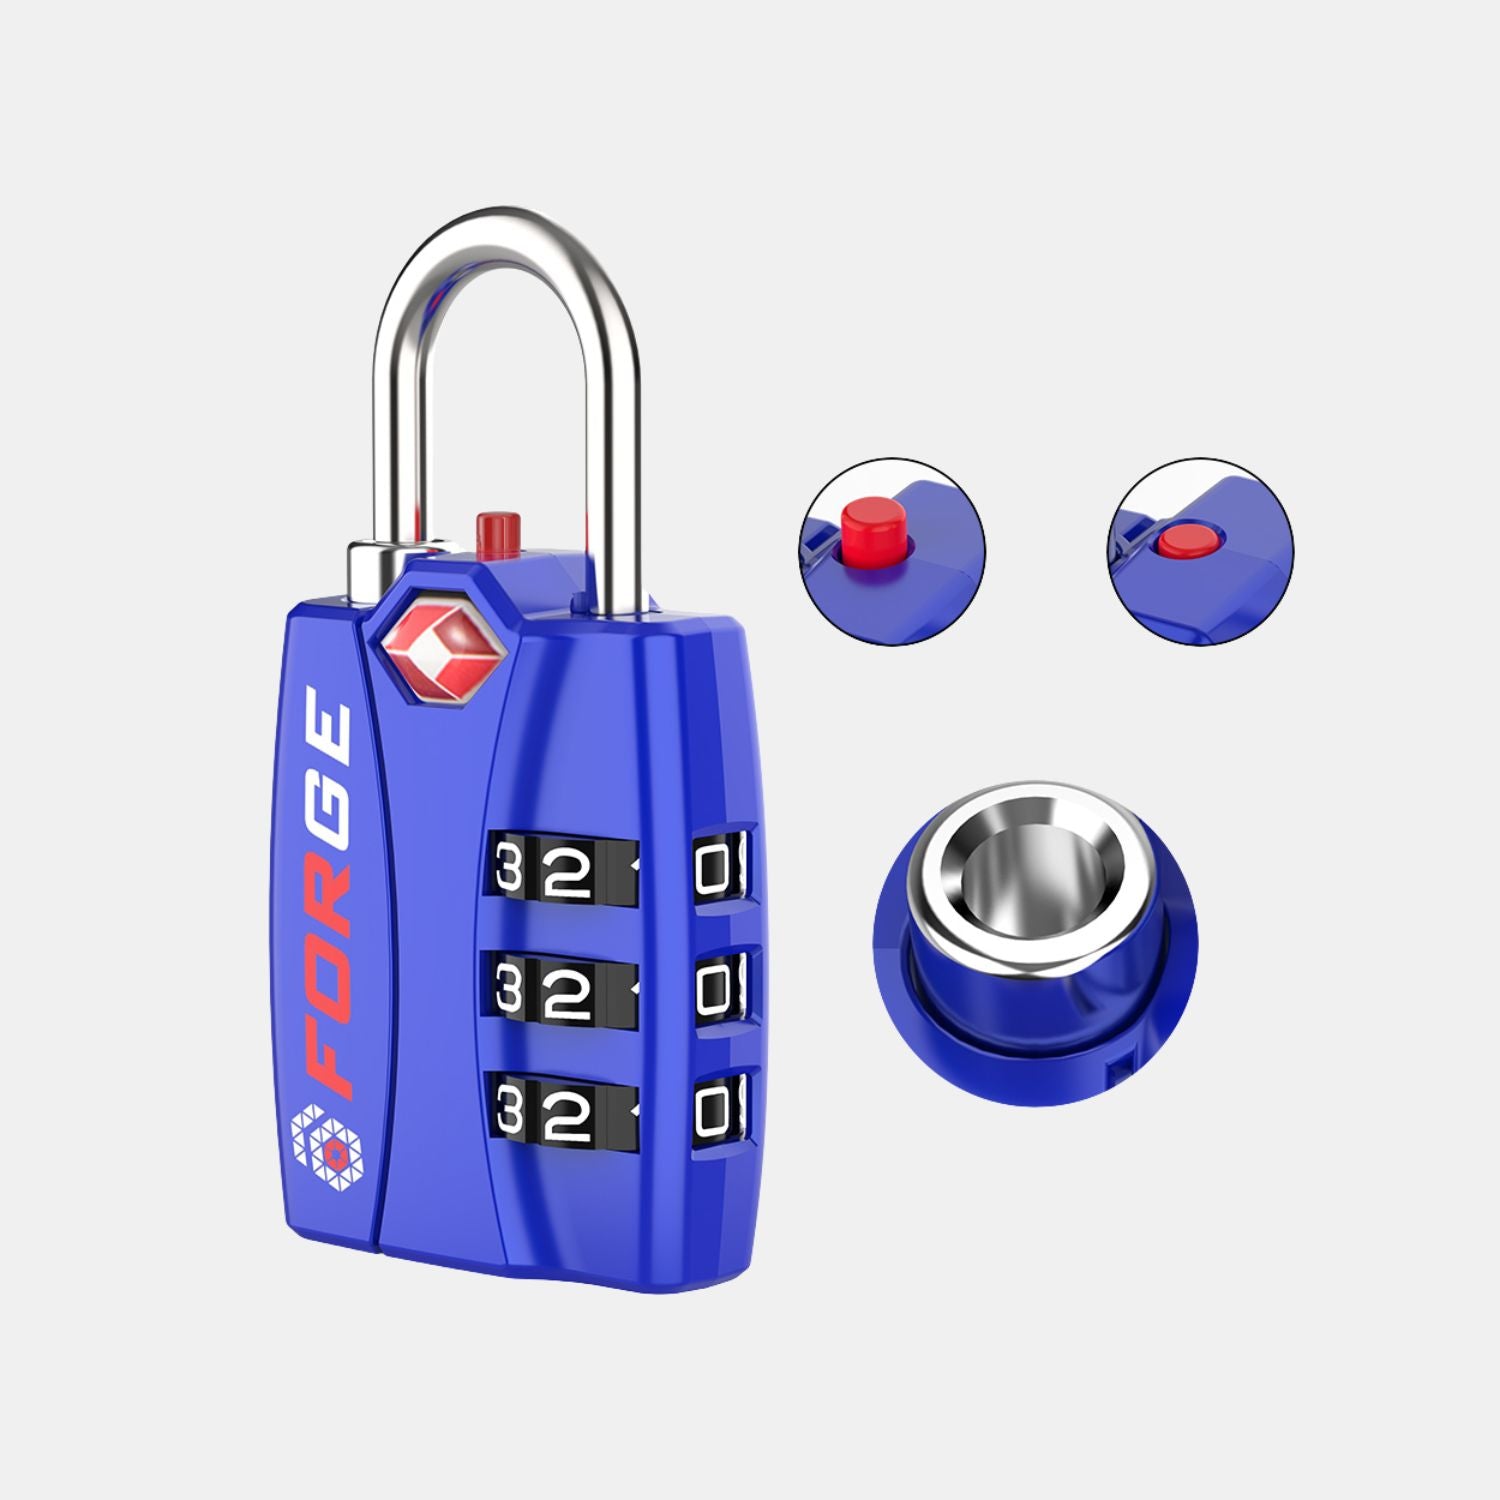 TSA-Approved Luggage Locks: 3-Digit Combination, Open Alert Indicator, Blue 2 Locks